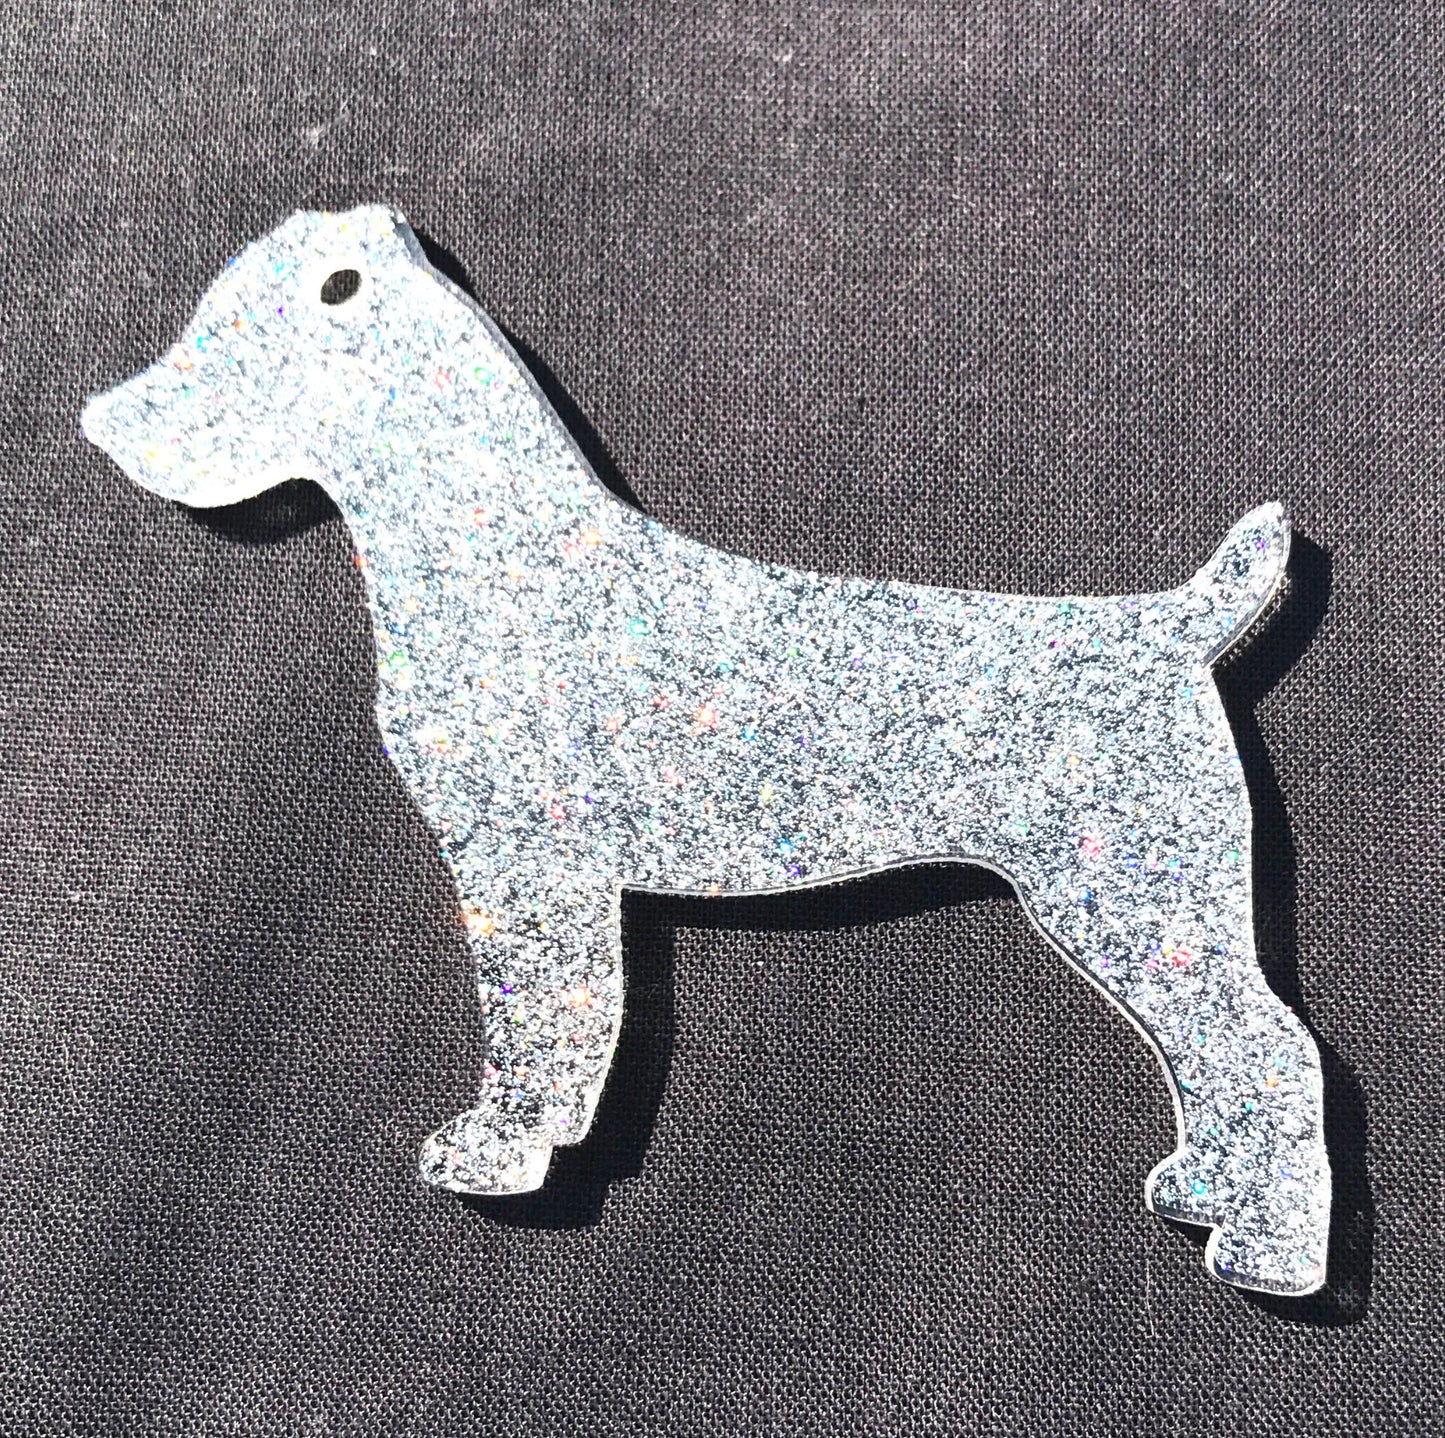 Jack Russell Terrier Blank Acrylic Shape - 3 Inch